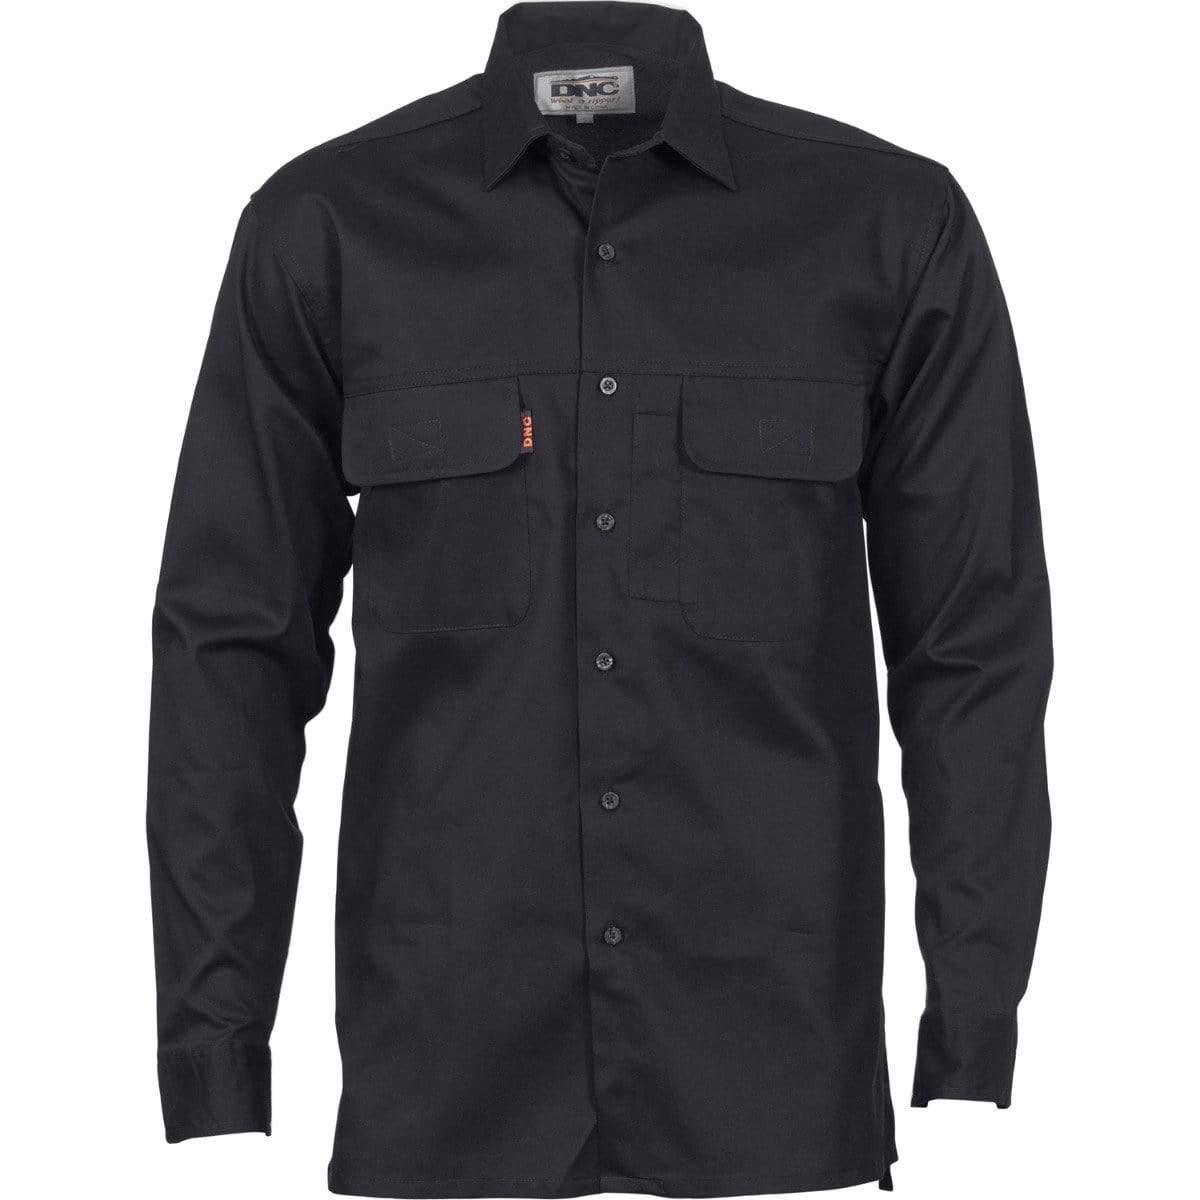 Dnc Workwear Three-way Cool Breeze Long Sleeve Work Shirt - 3224 Work Wear DNC Workwear Black 5XL 